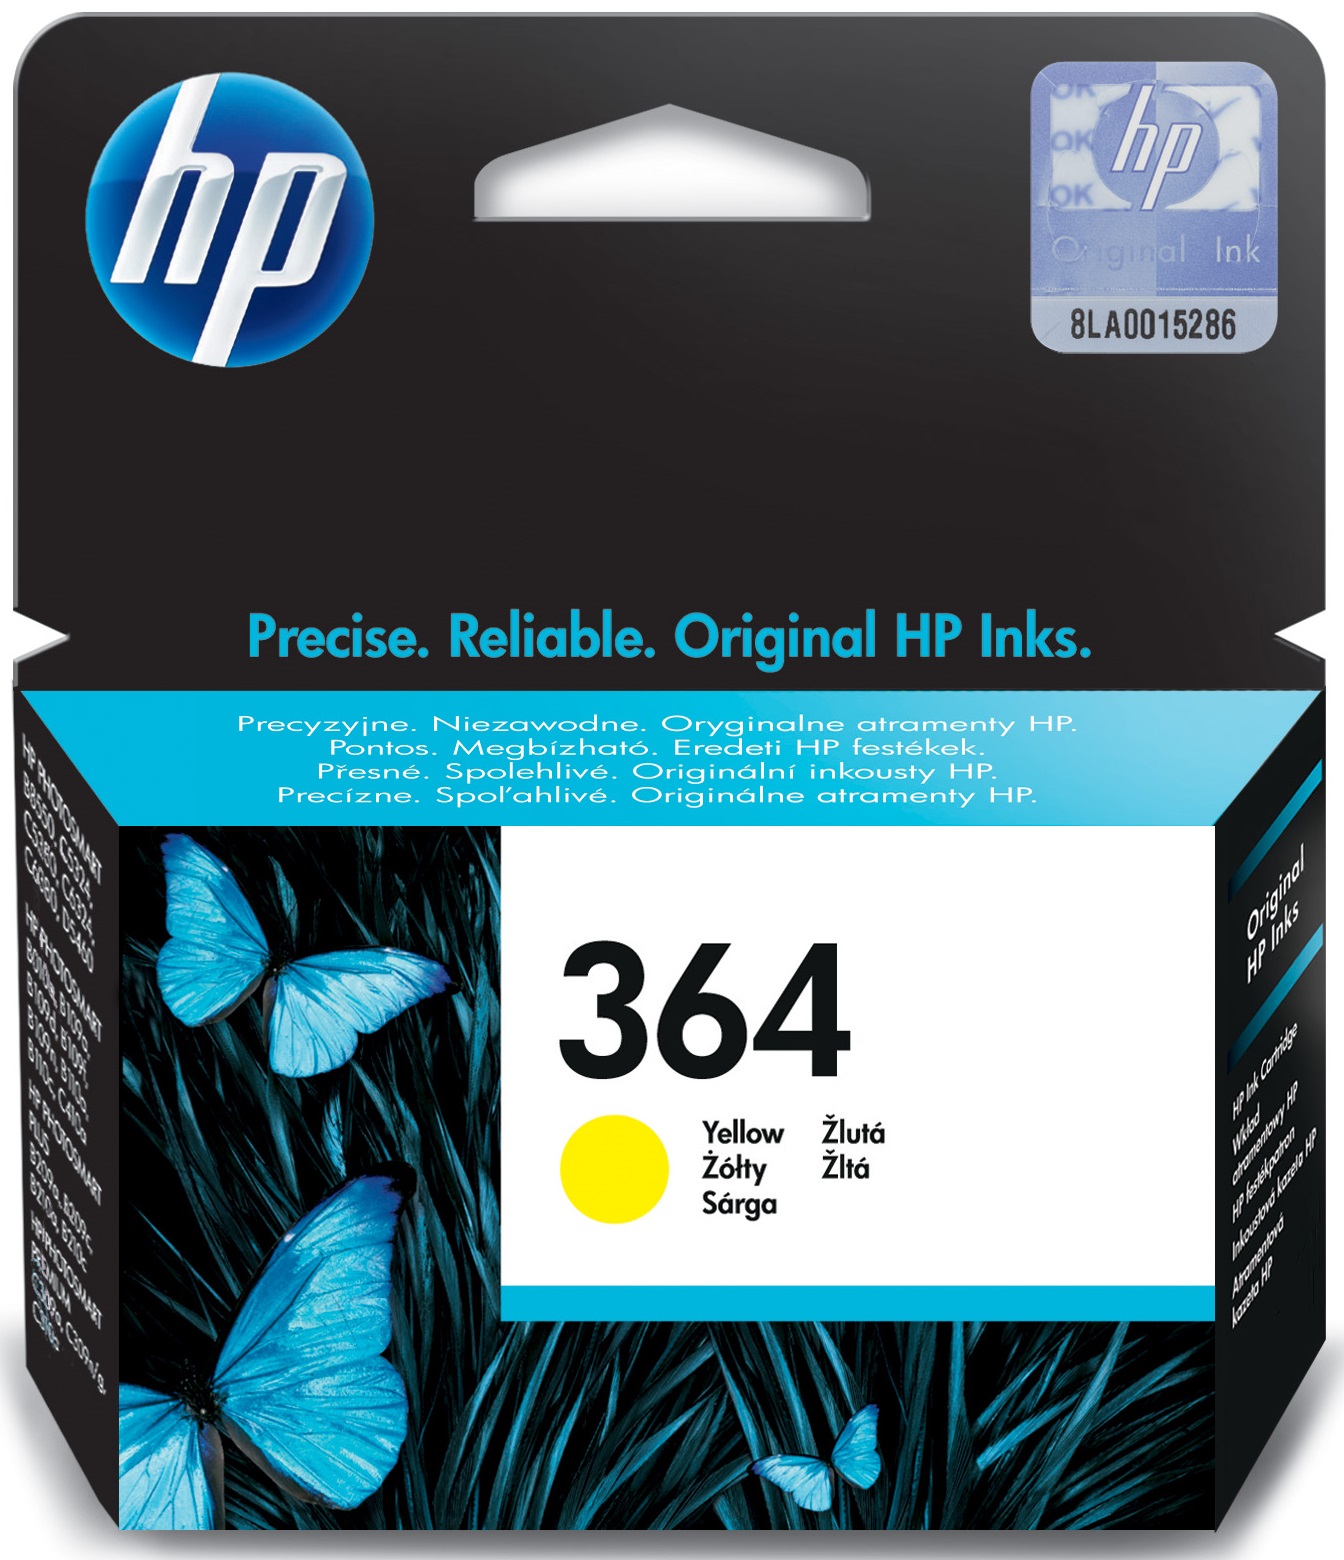 HP 364 Ink Cartridge, Yellow | Hp